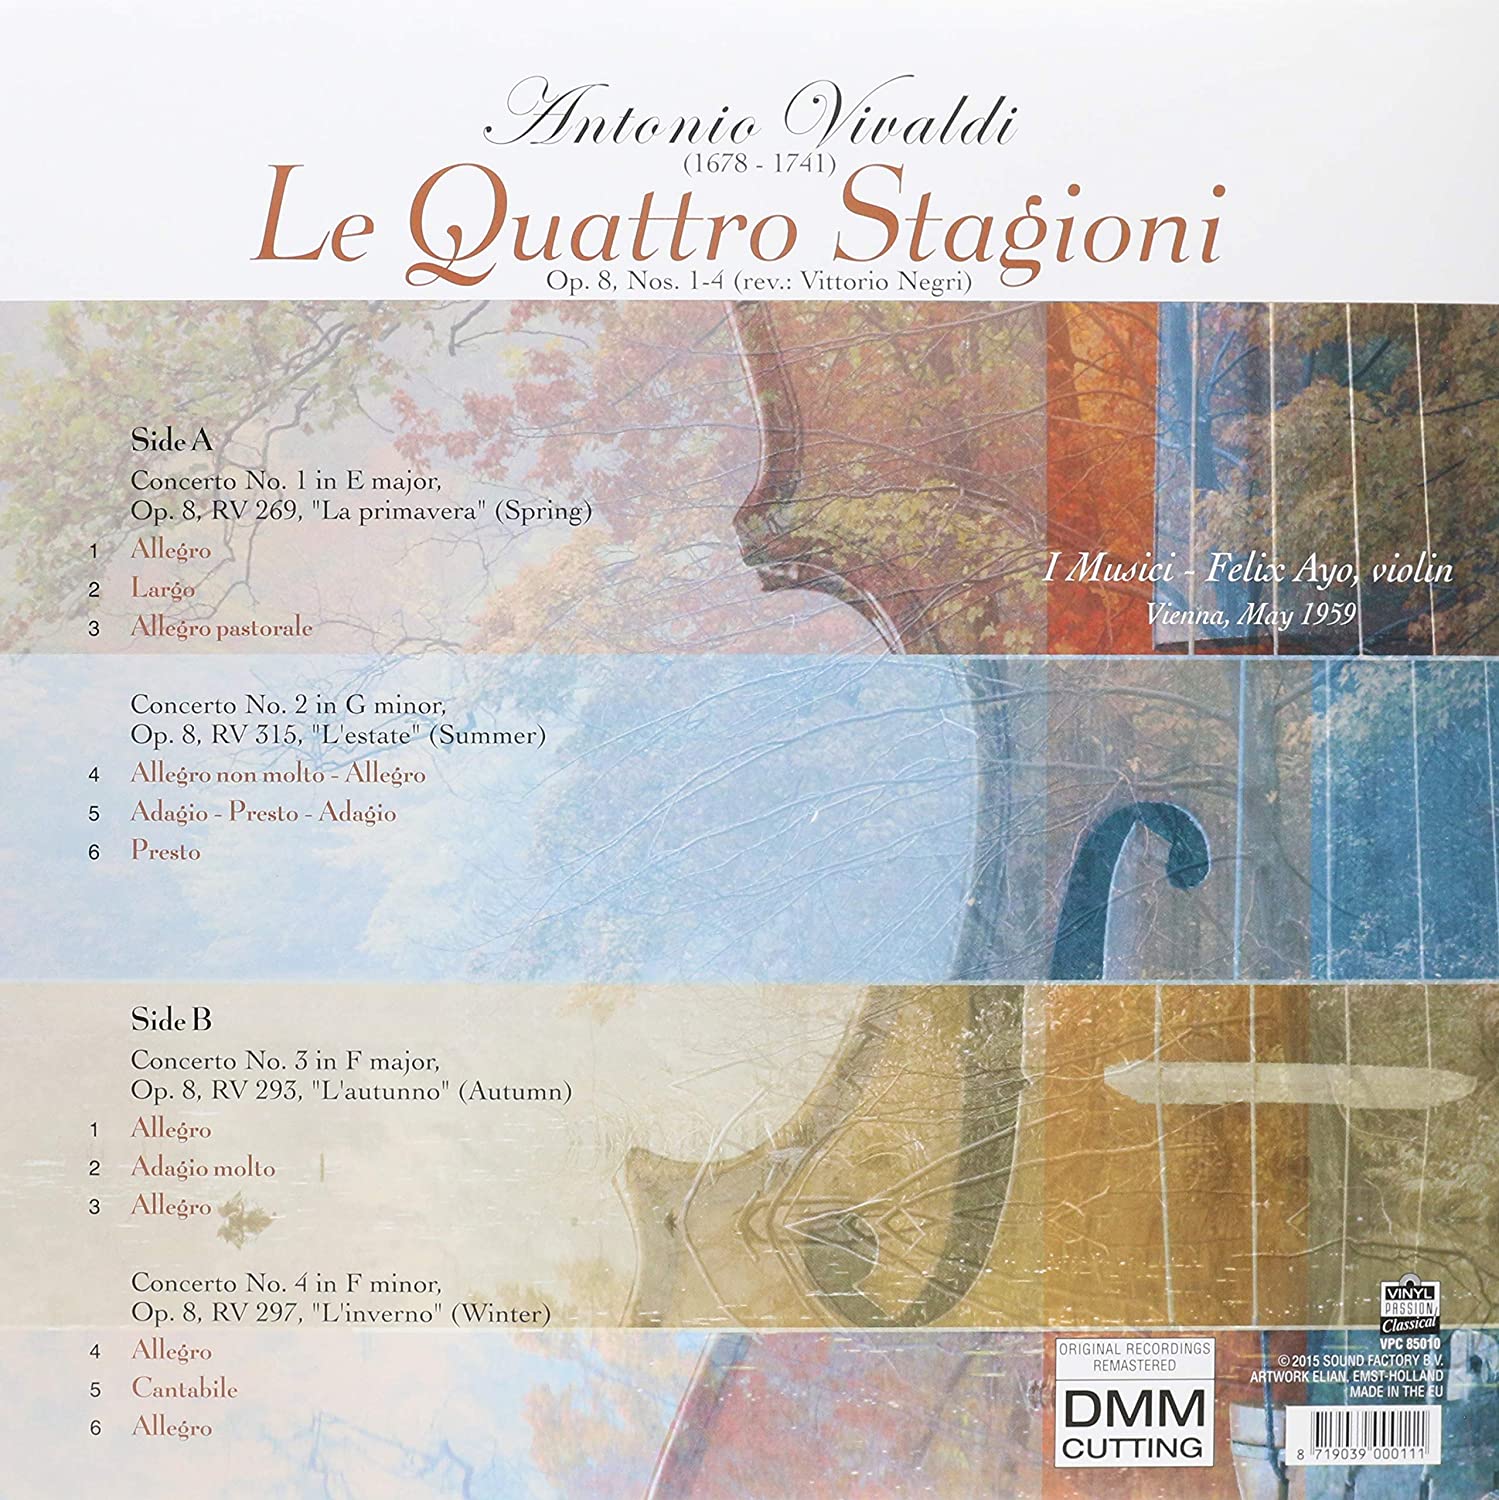 I Musici / Felix Ayo 비발디: 사계 (Vivaldi: The Four Seasons) [LP]